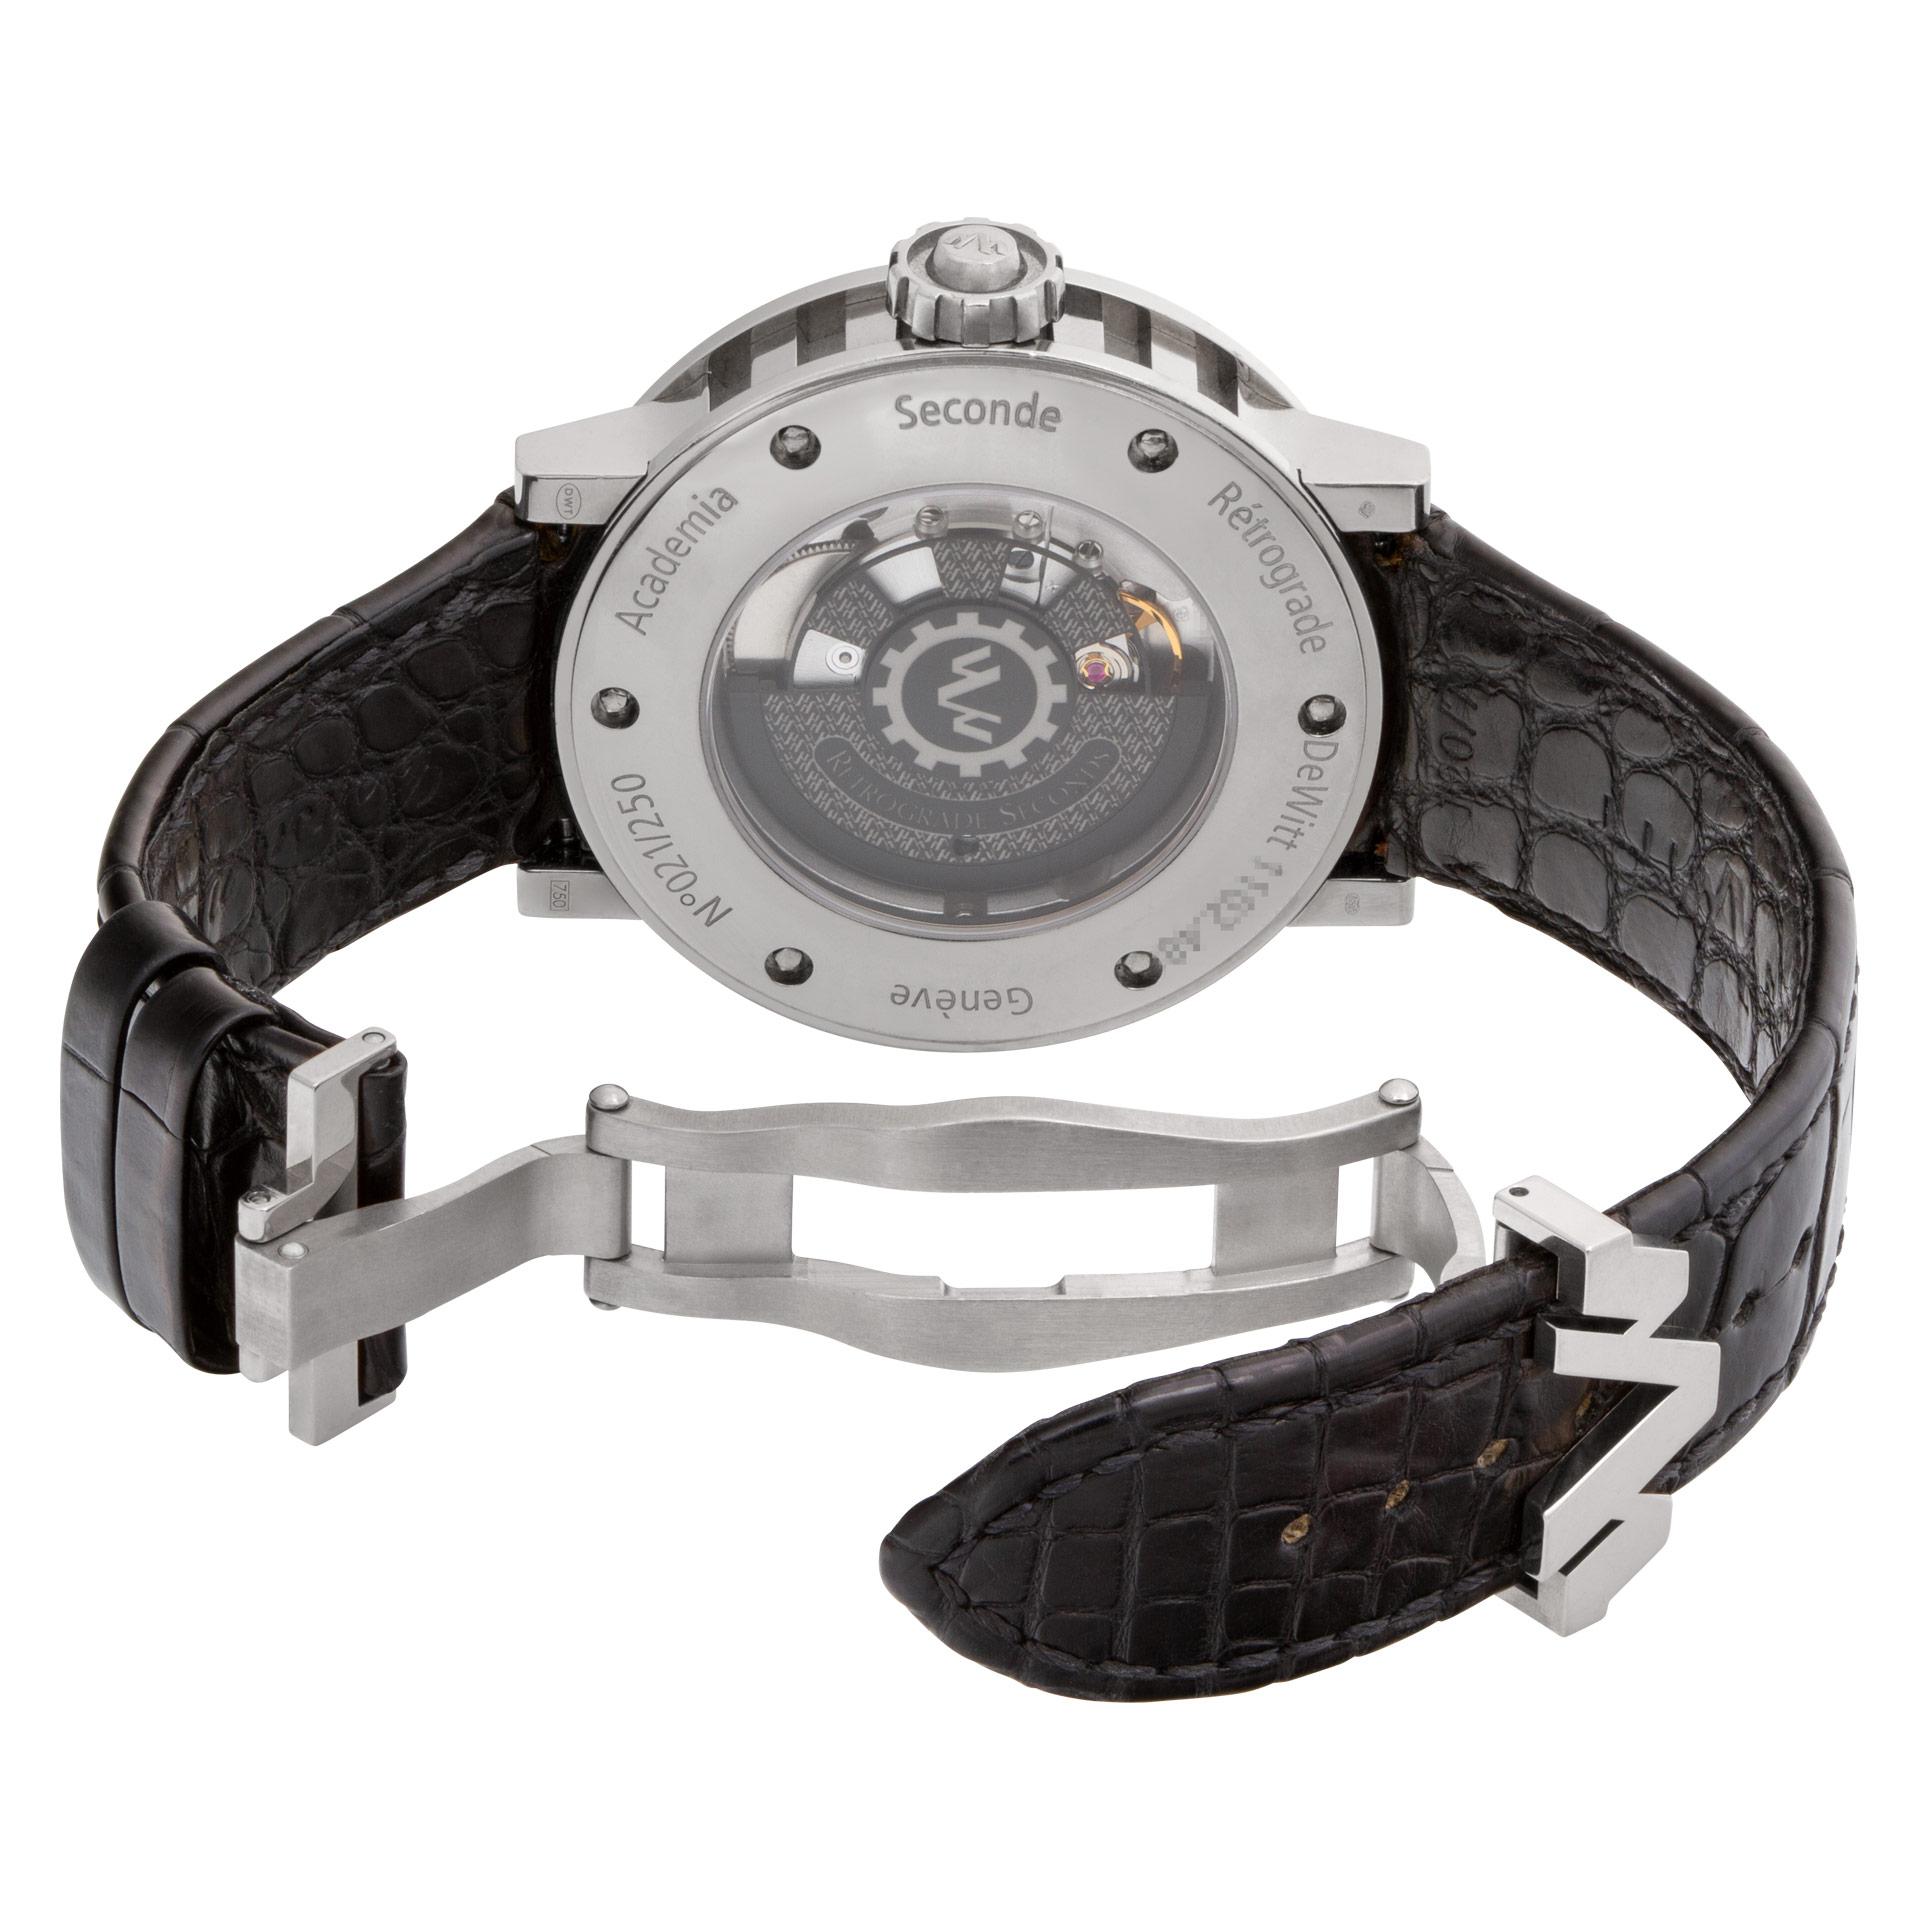 DeWitt Academia Seconde Retrograde 18k white gold Auto wristwatch For Sale 1